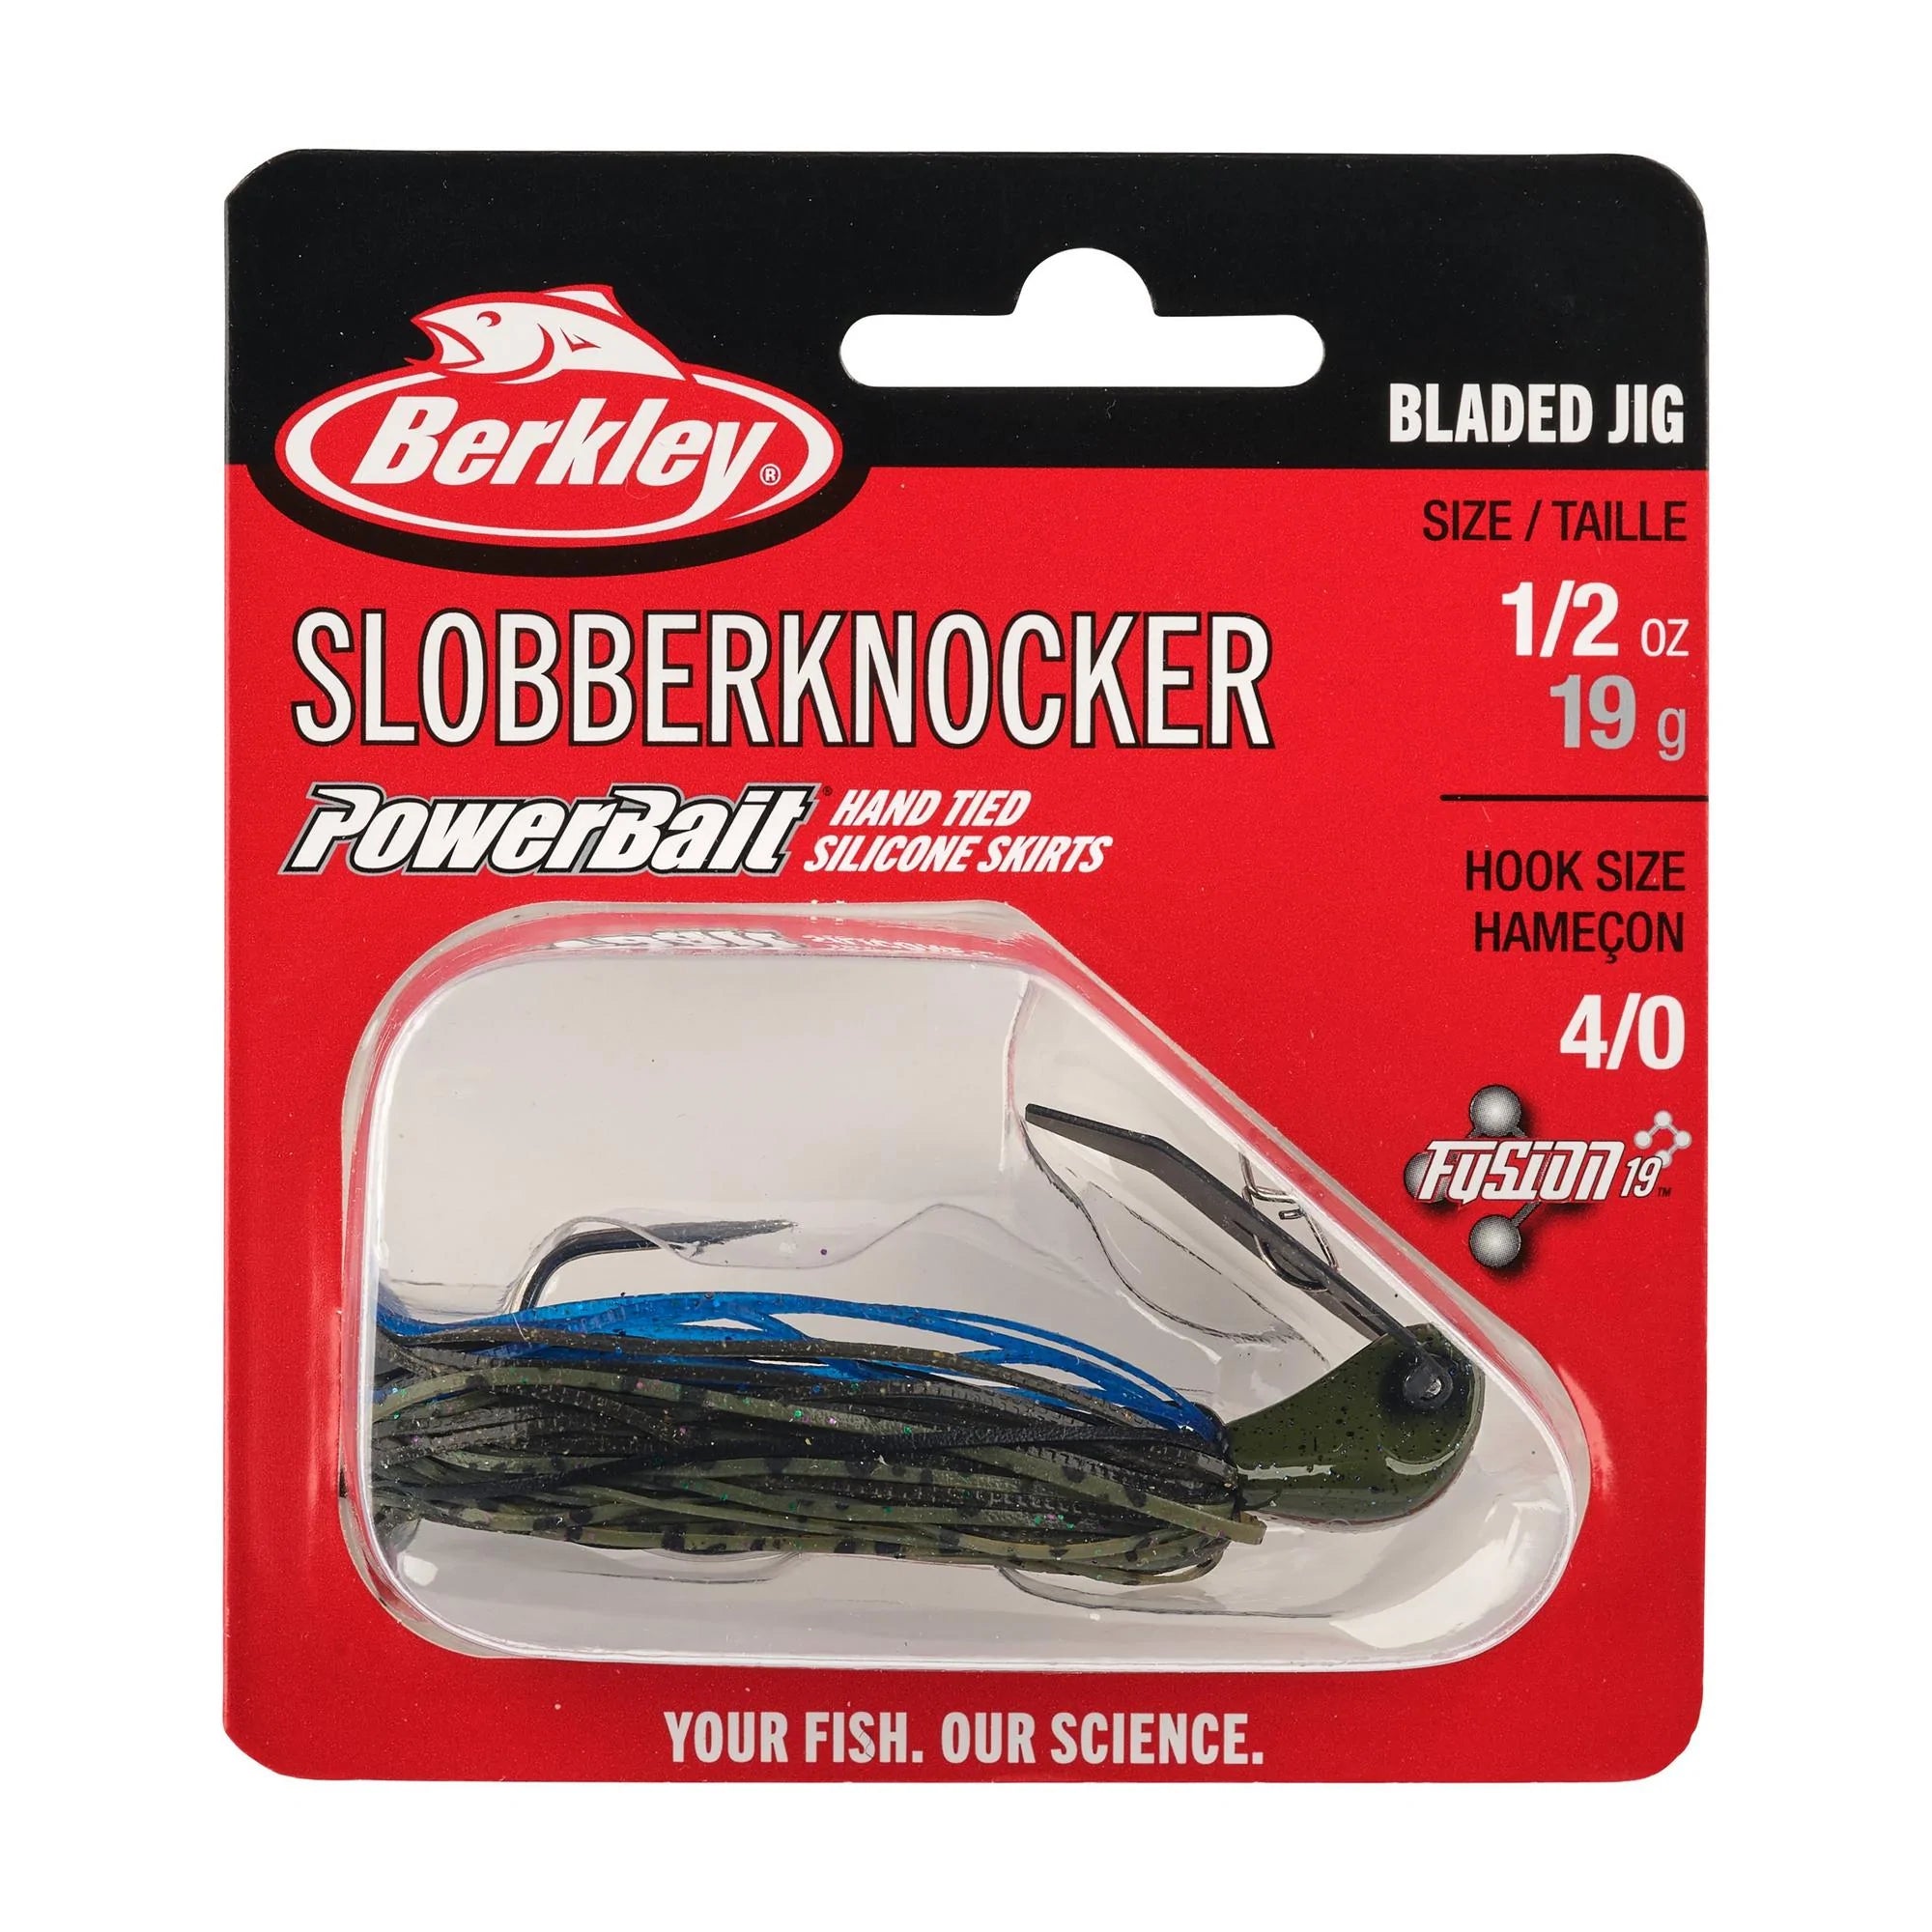 Berkley SlobberKnocker – Bonafide Fishing